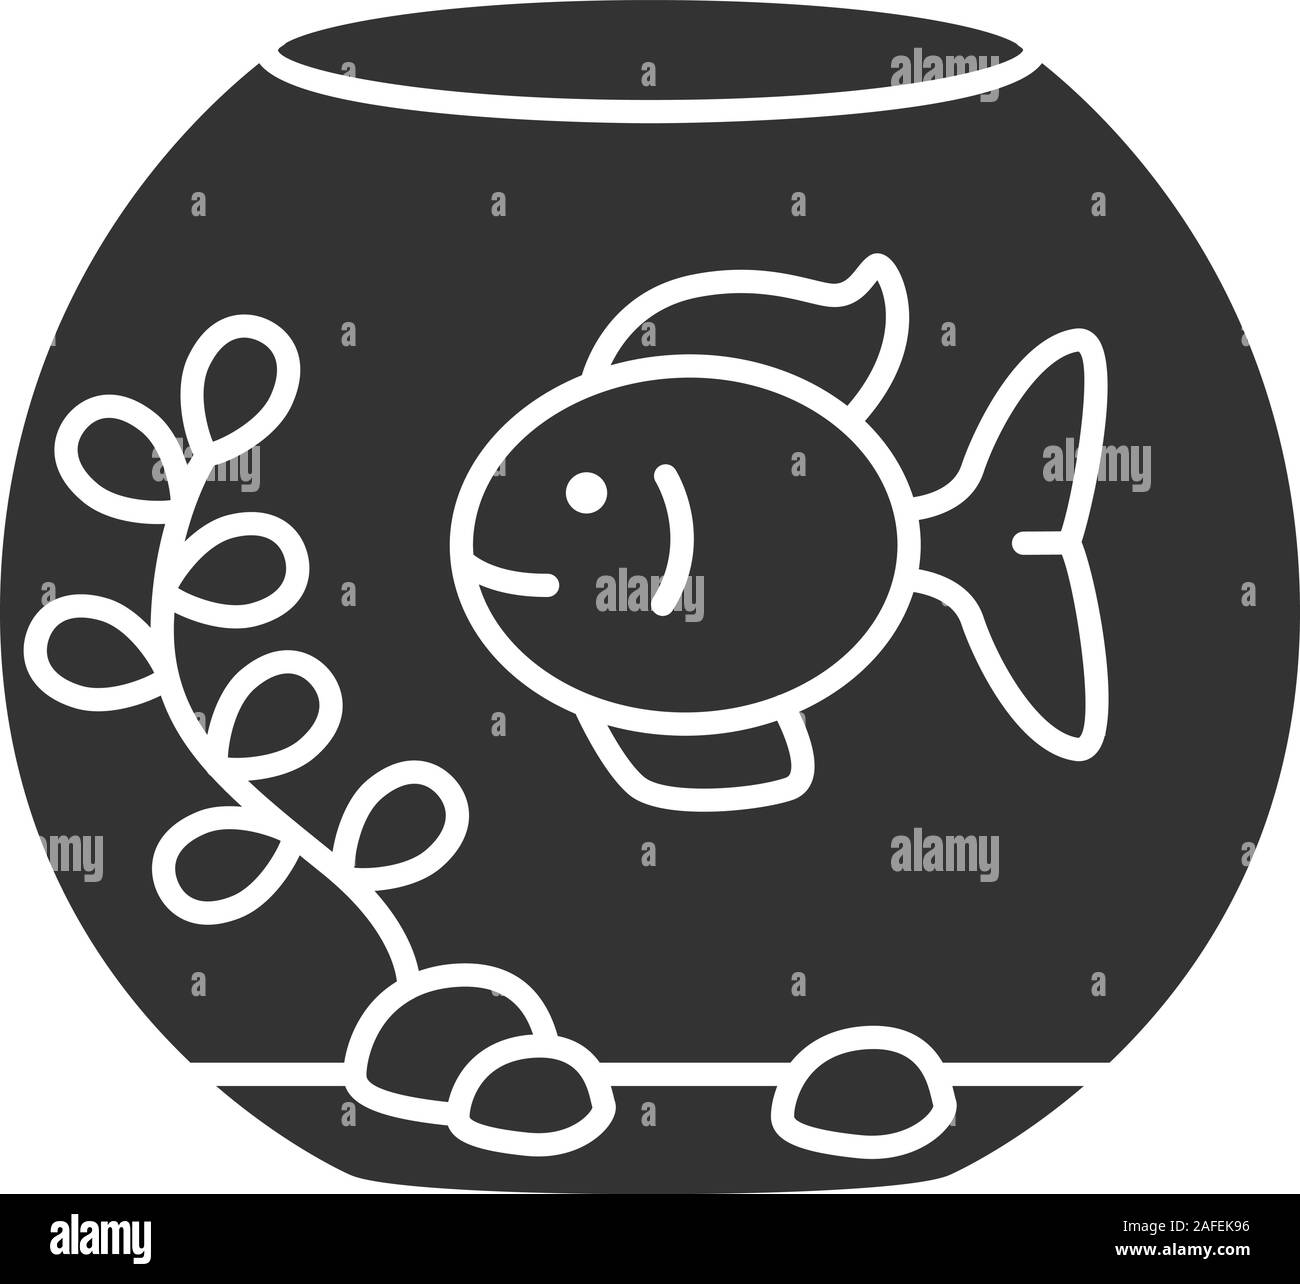 Aquarium glyph icon. Fishkeeping. Fish tank. Silhouette symbol. Negative space. Vector isolated illustration Stock Vector